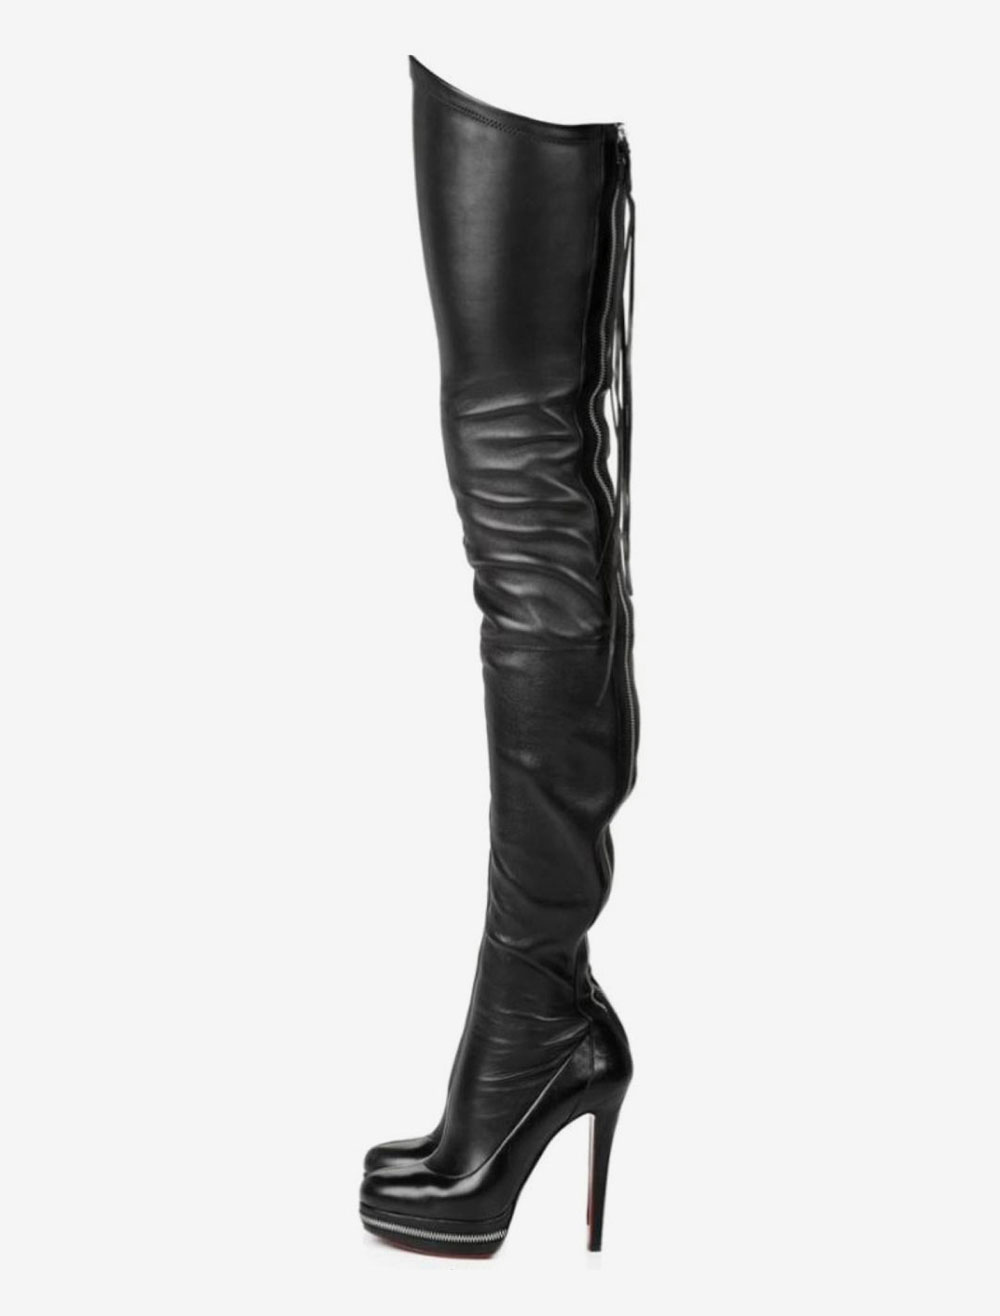 Thigh High Boots High Heel Women's Black Leather back zipper Sexy boots ...